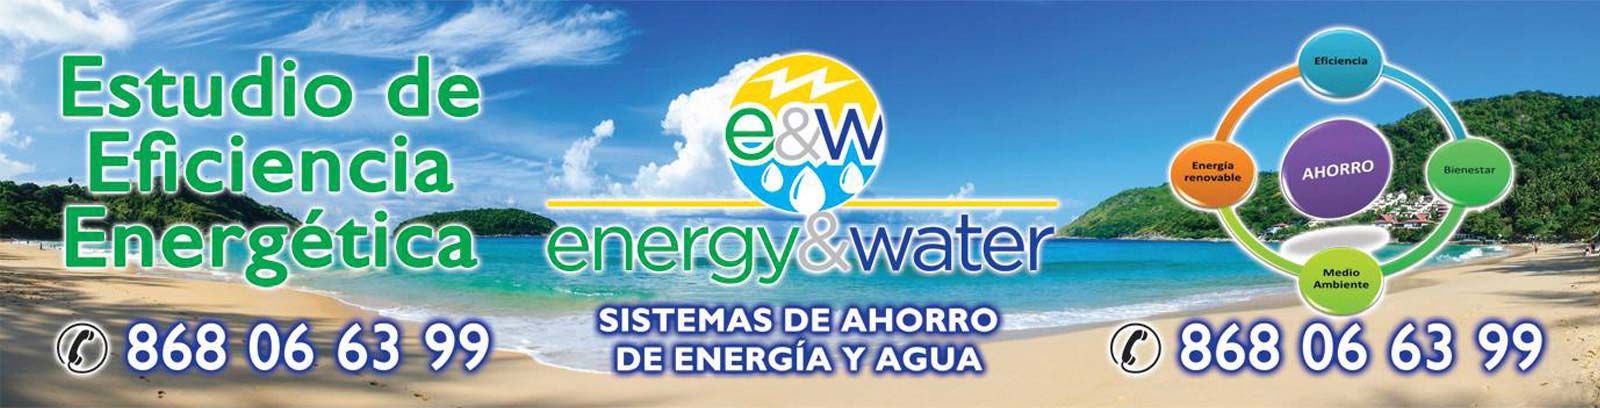 Energy & Water banner 1